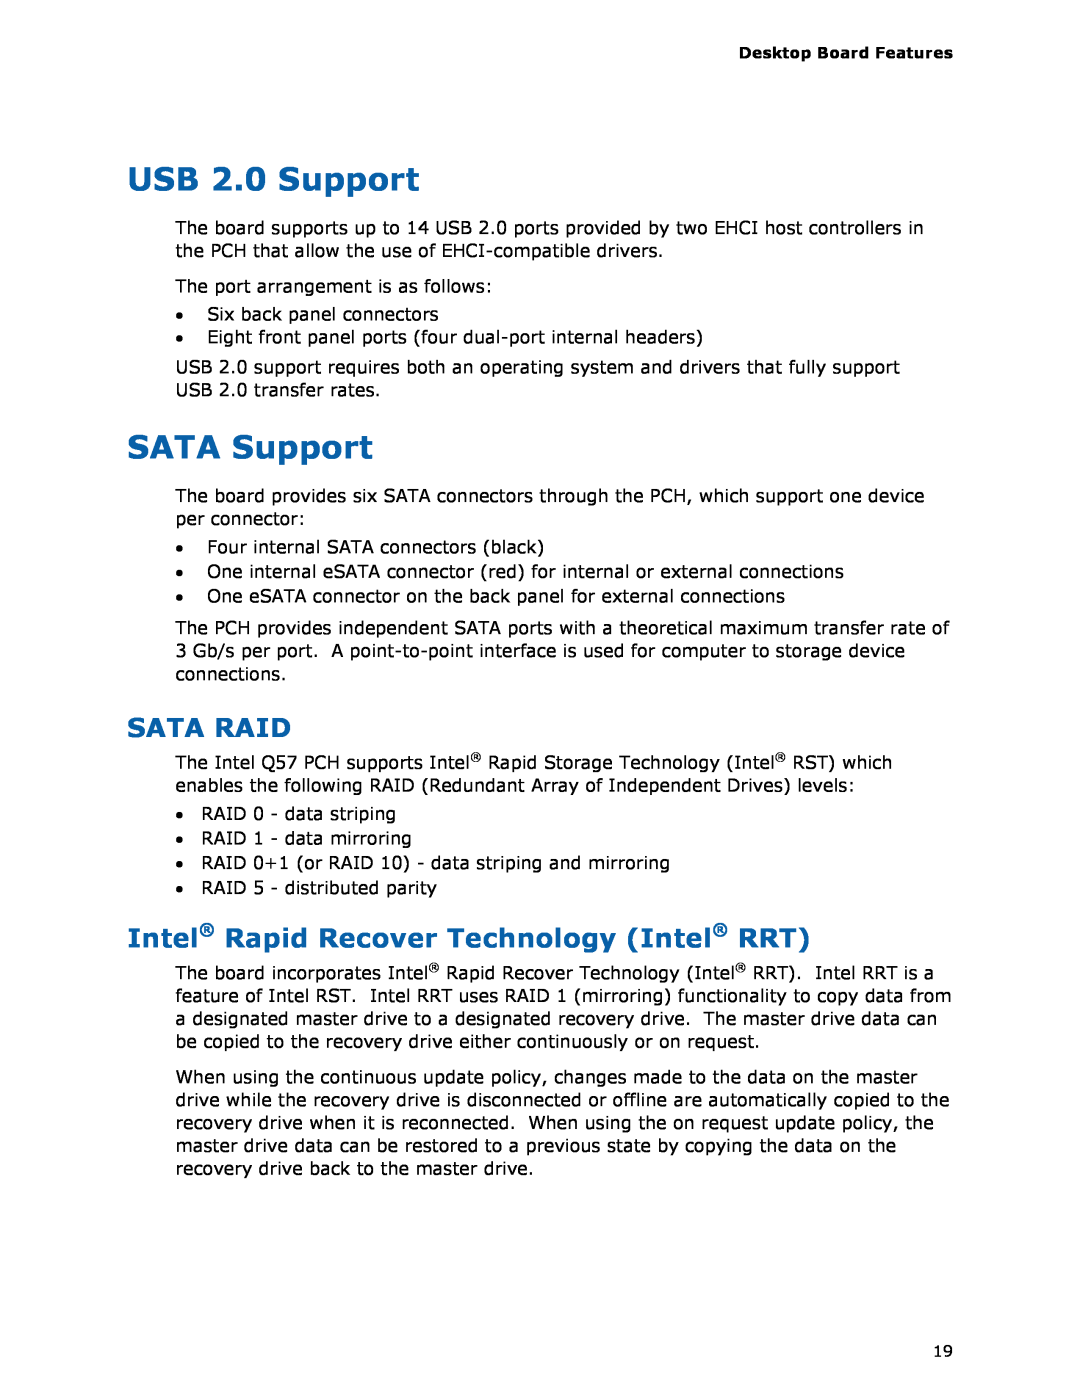 Intel DQ57TM manual USB 2.0 Support, SATA Support, Sata Raid, Intel Rapid Recover Technology Intel RRT 